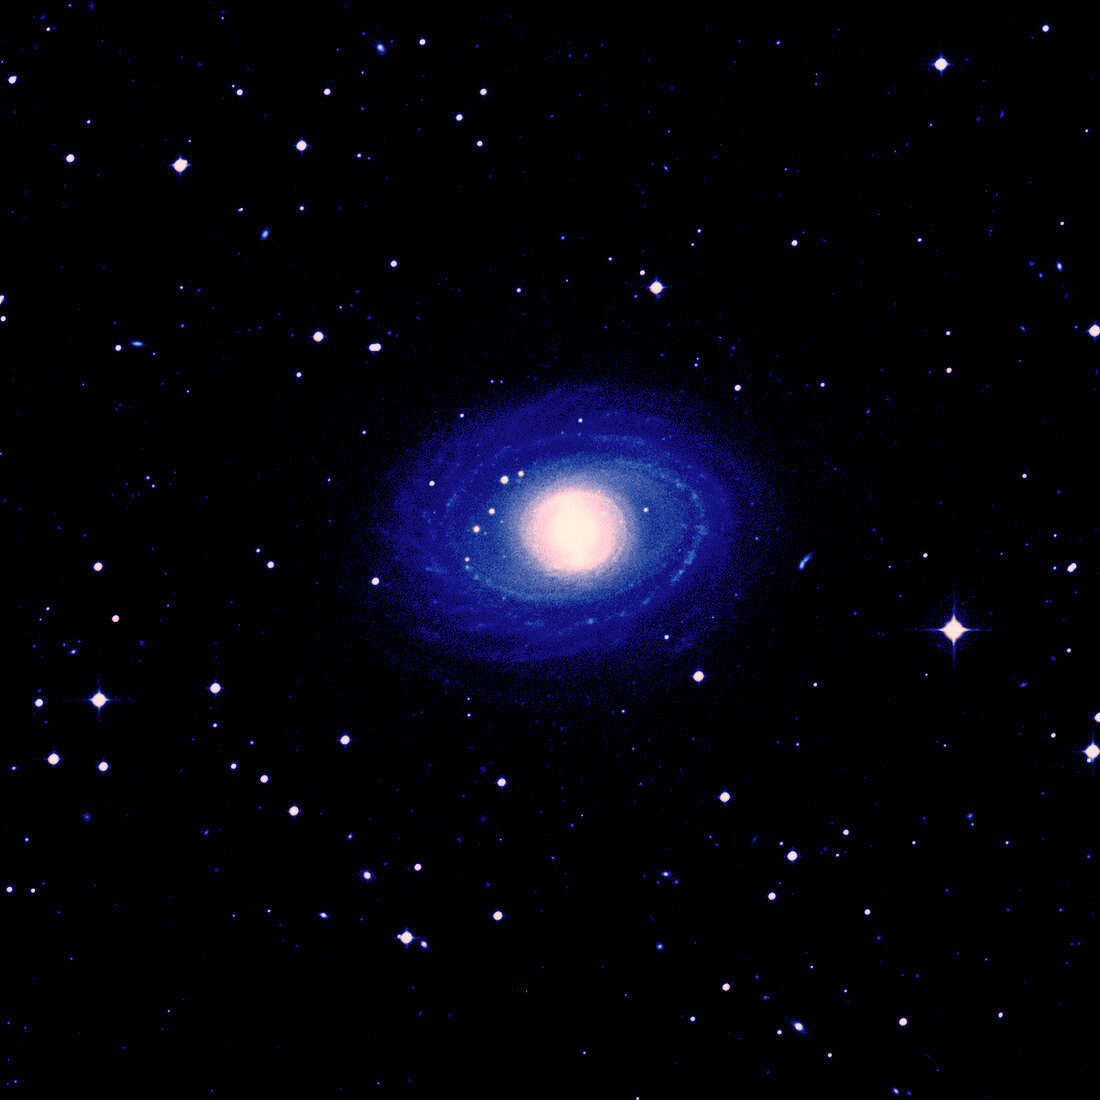 Galaxy NGC 1398